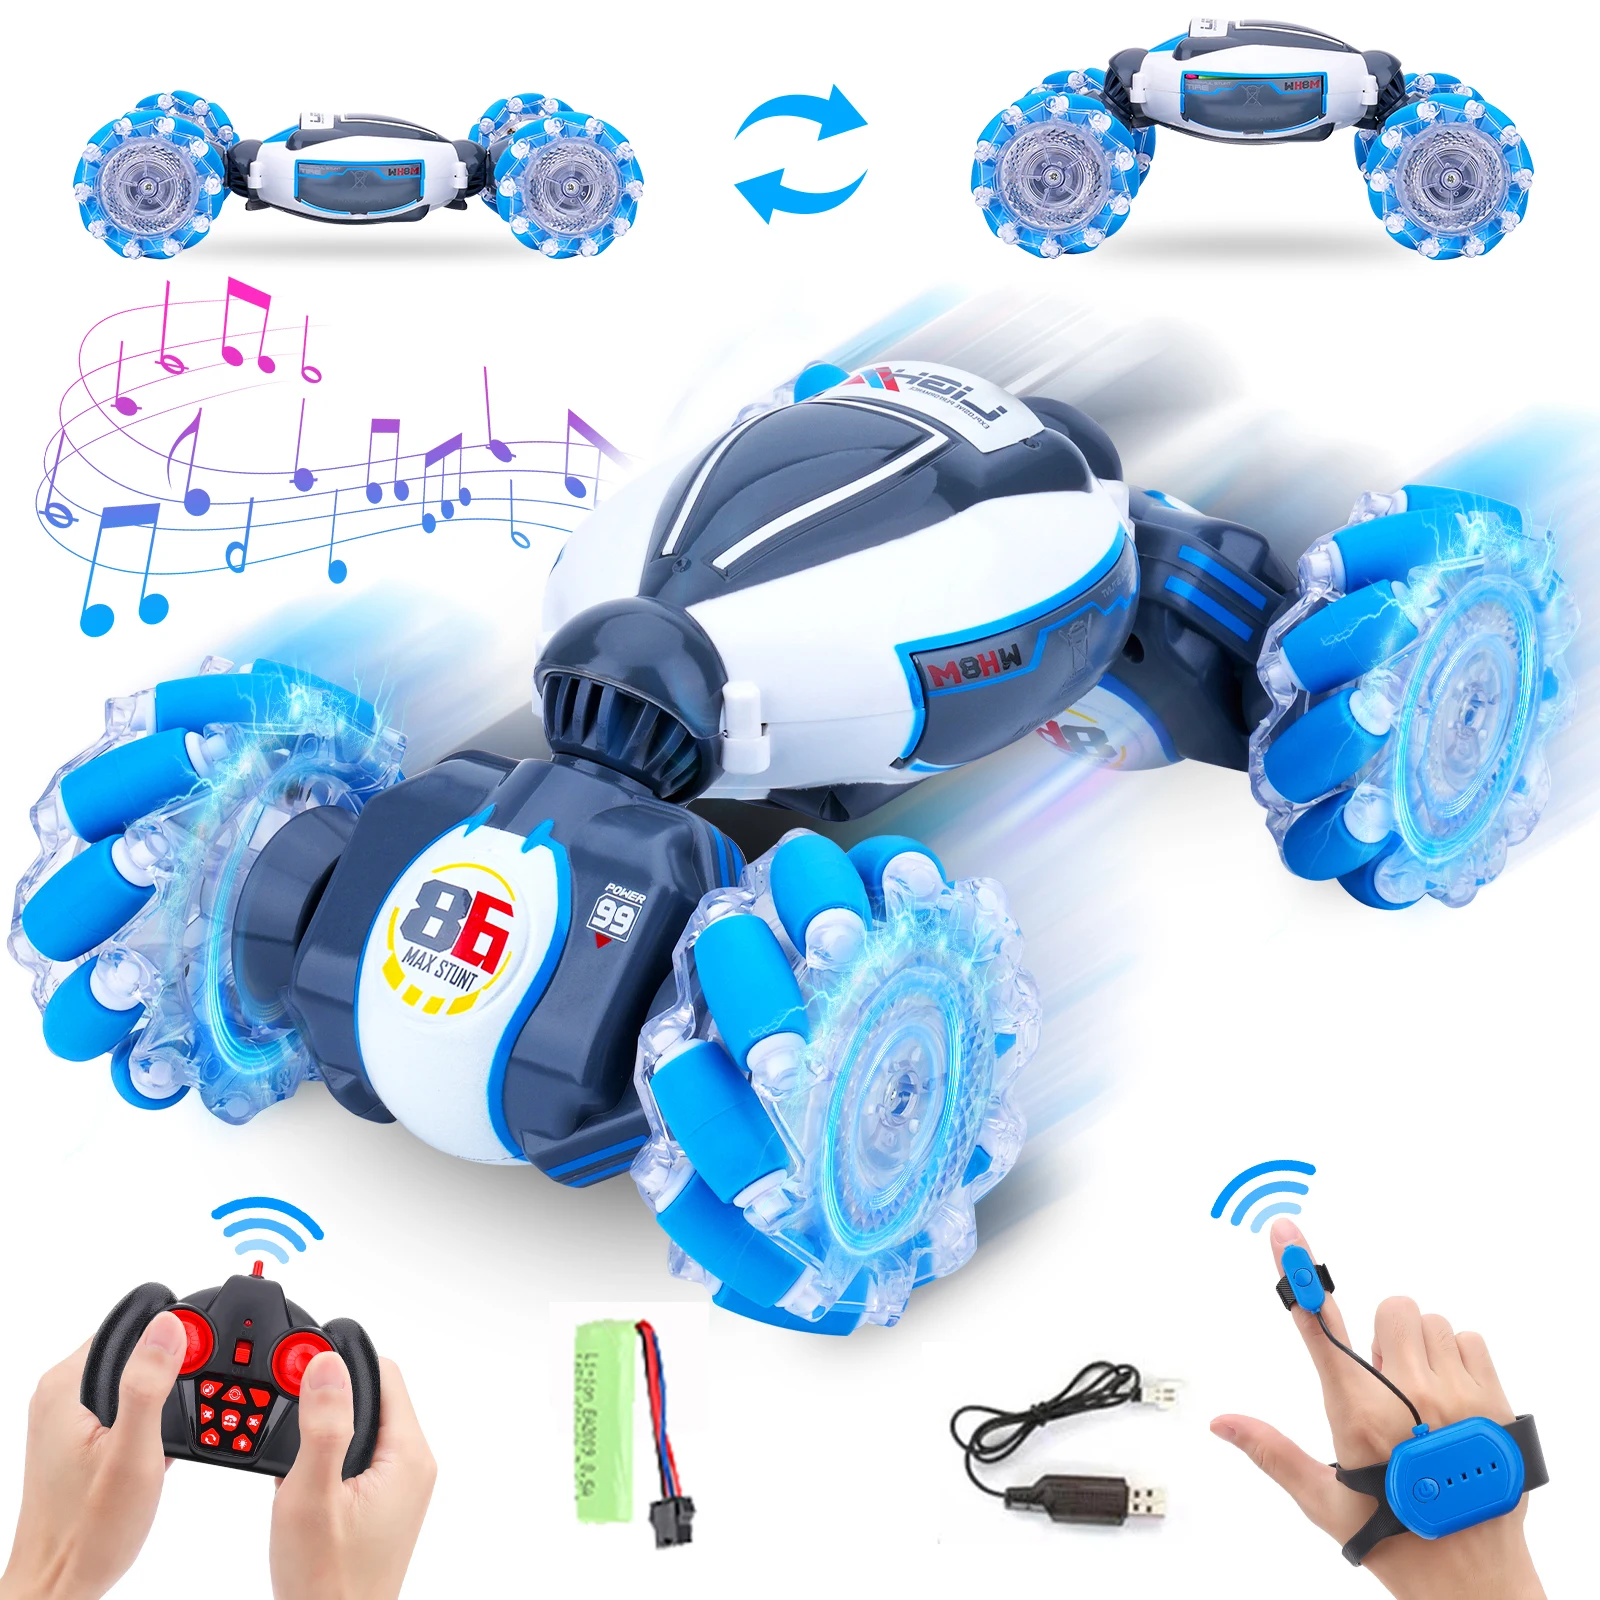 

RC Car Toy Gesture Sensing Spray Twisting Stunt Drift Car Radio Remote Controlled Cars RC 4Wd Toys for Children Boys Adults